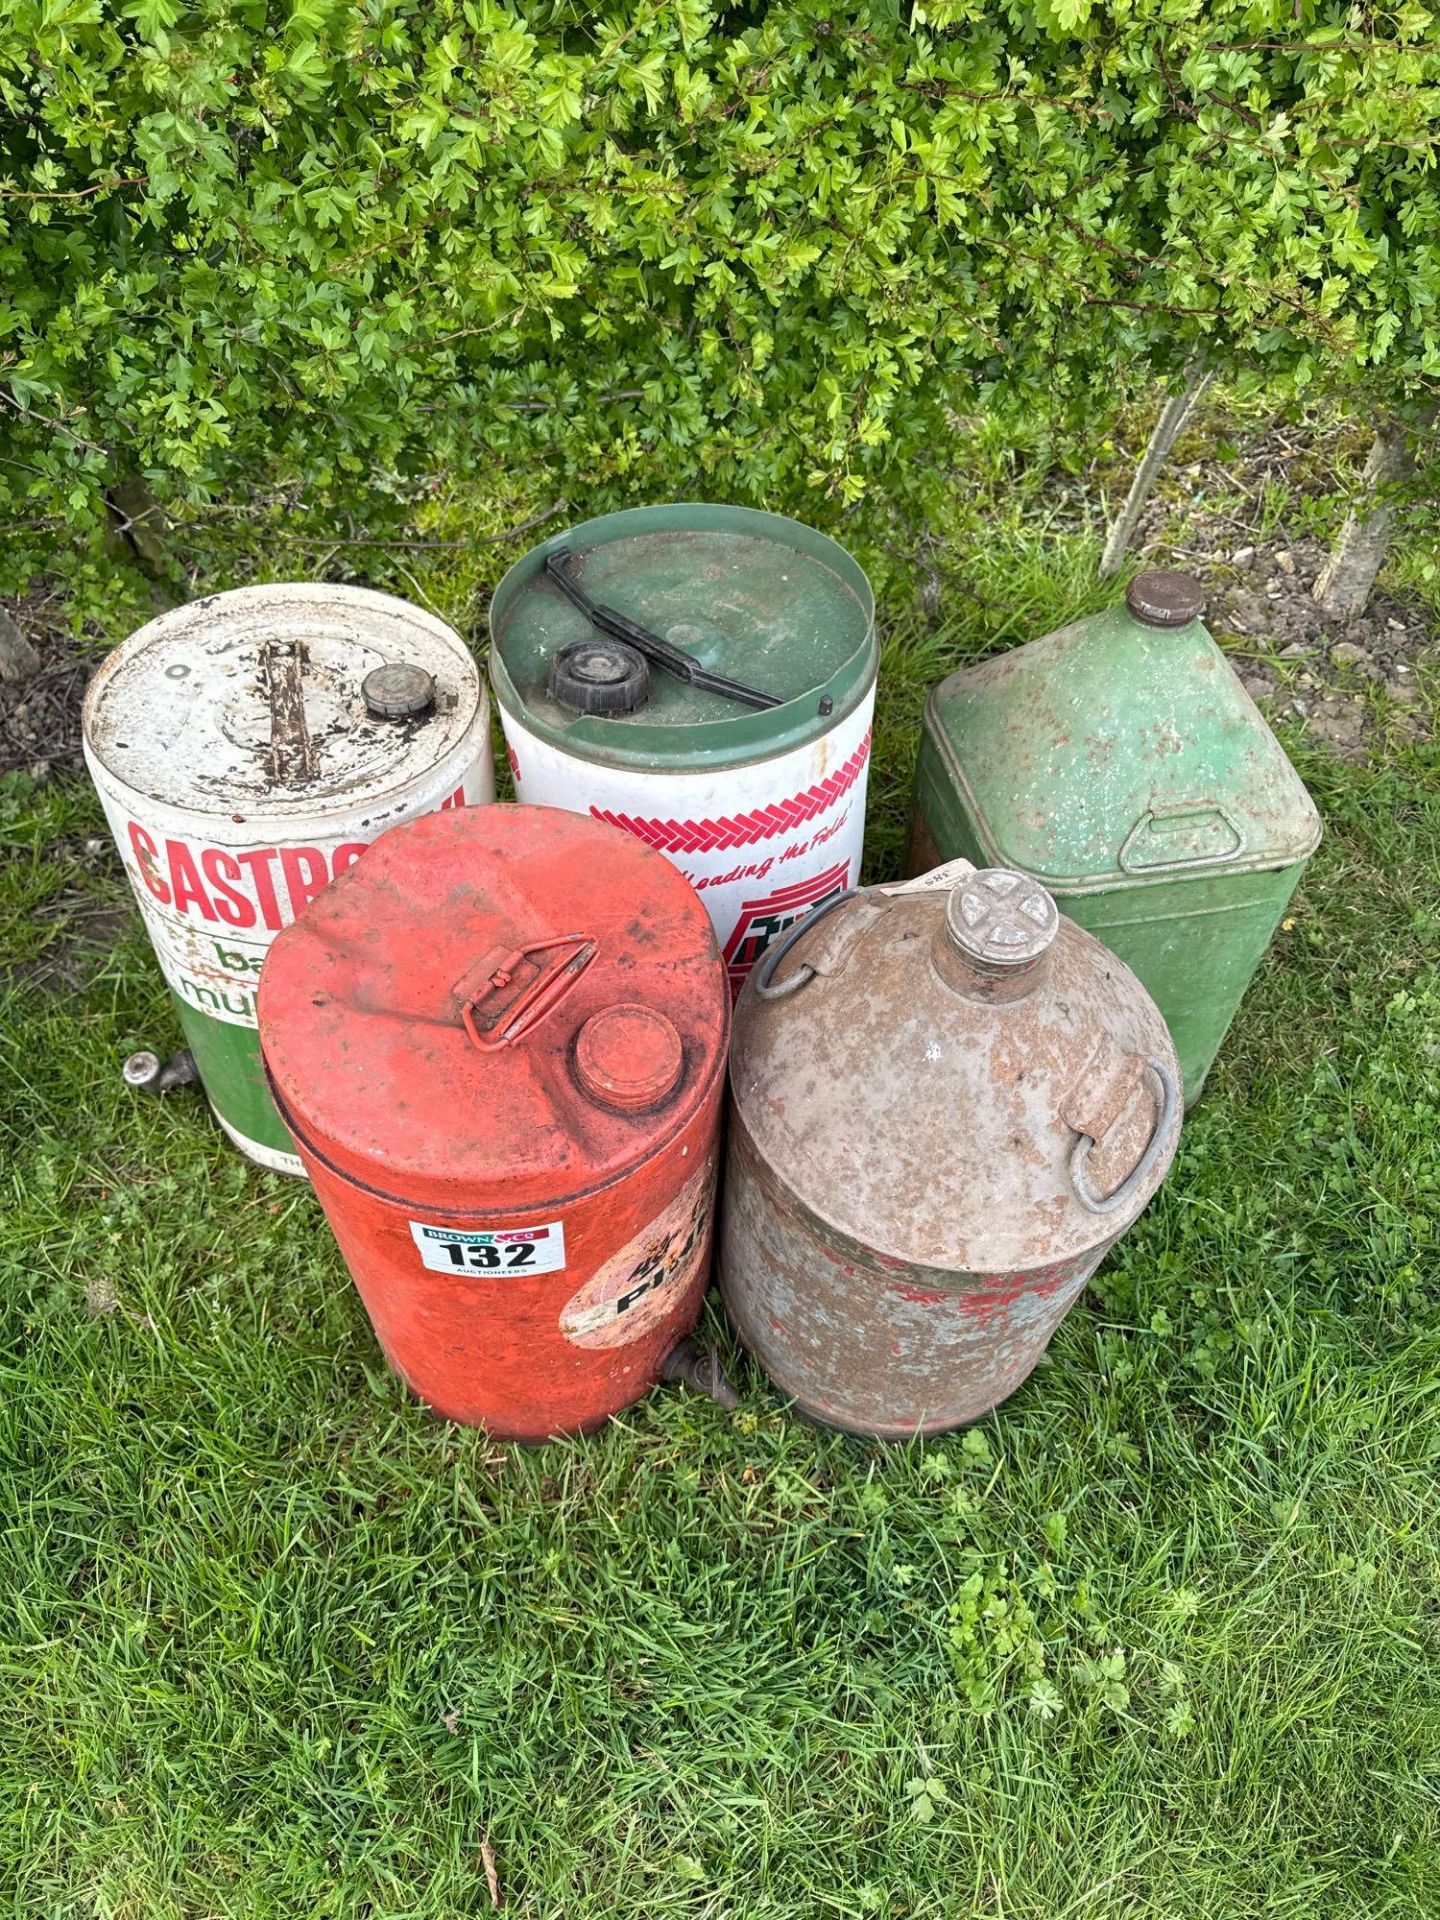 Vintage cans